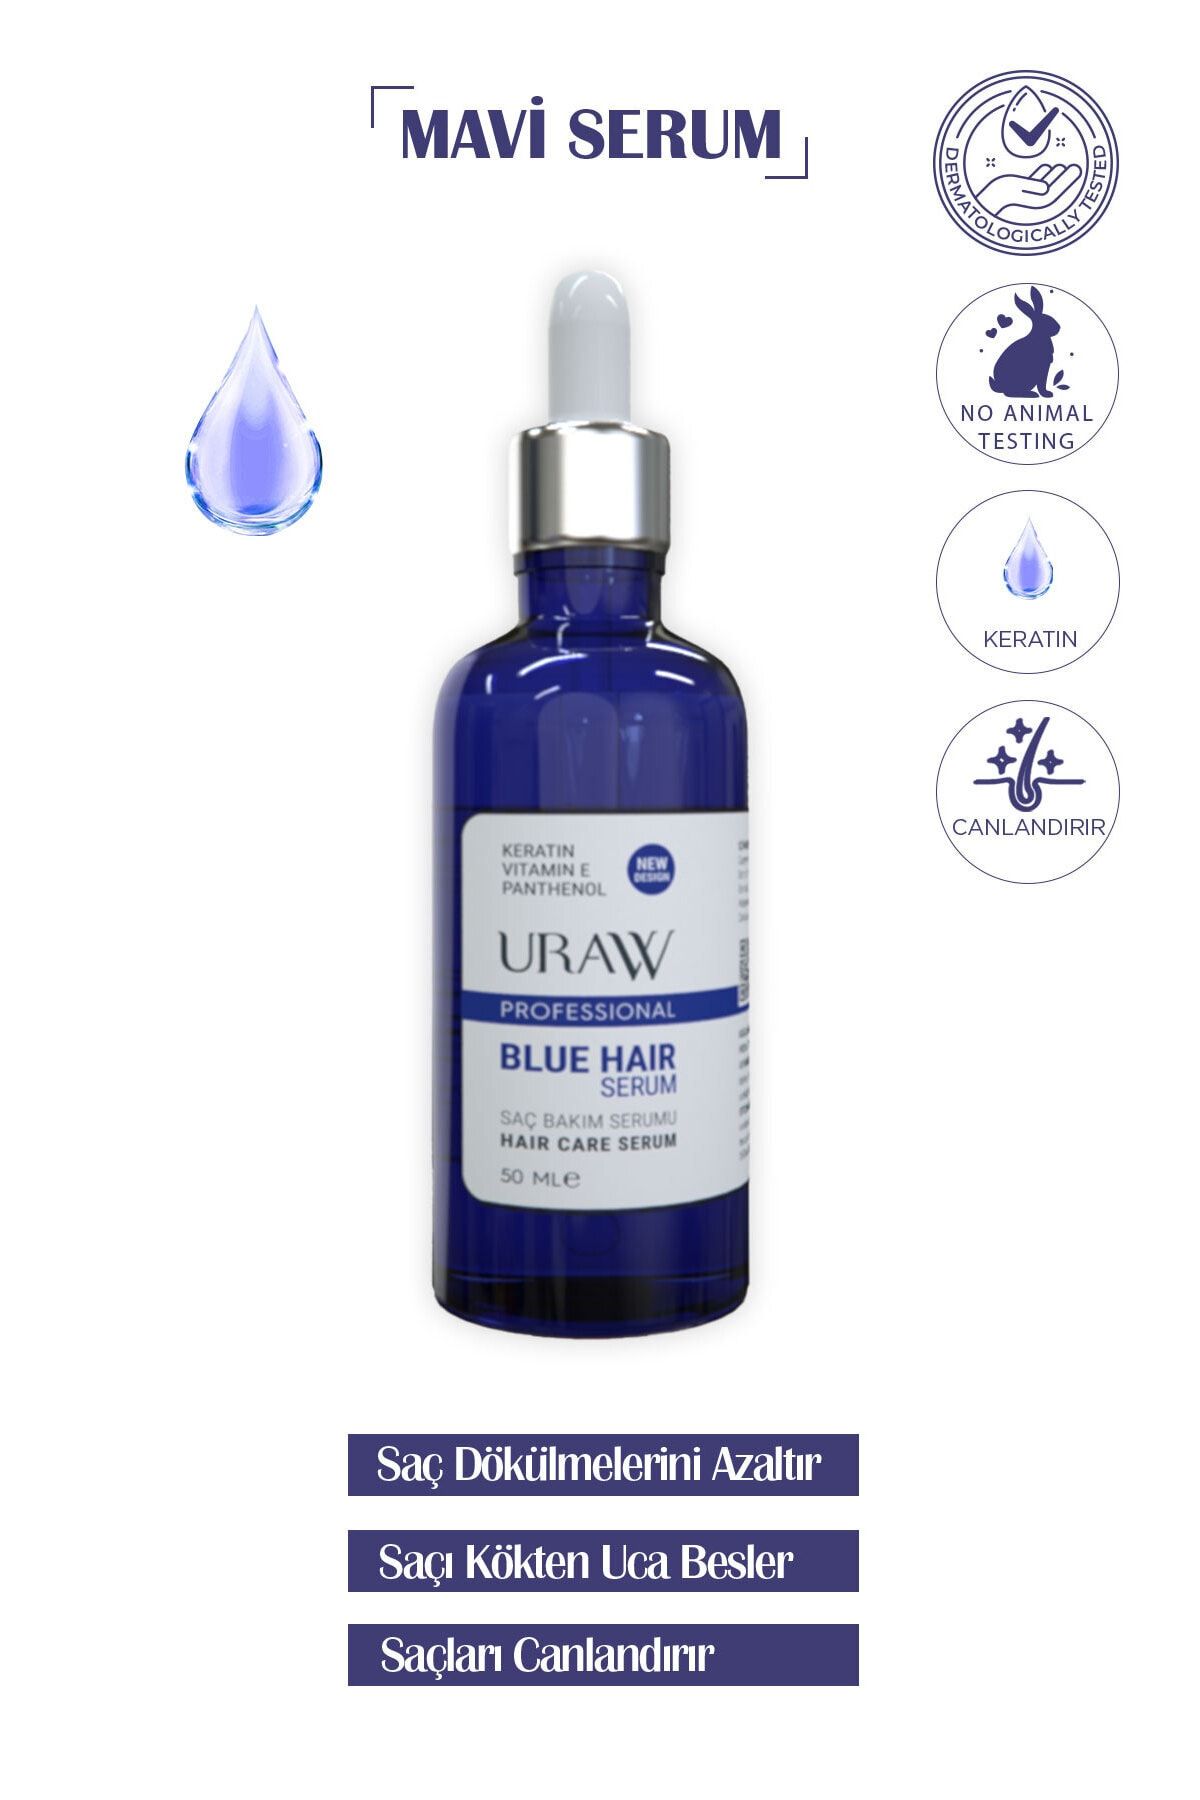 Uraw Blue Hair Serum (MAVİ SERUM) 50 ml